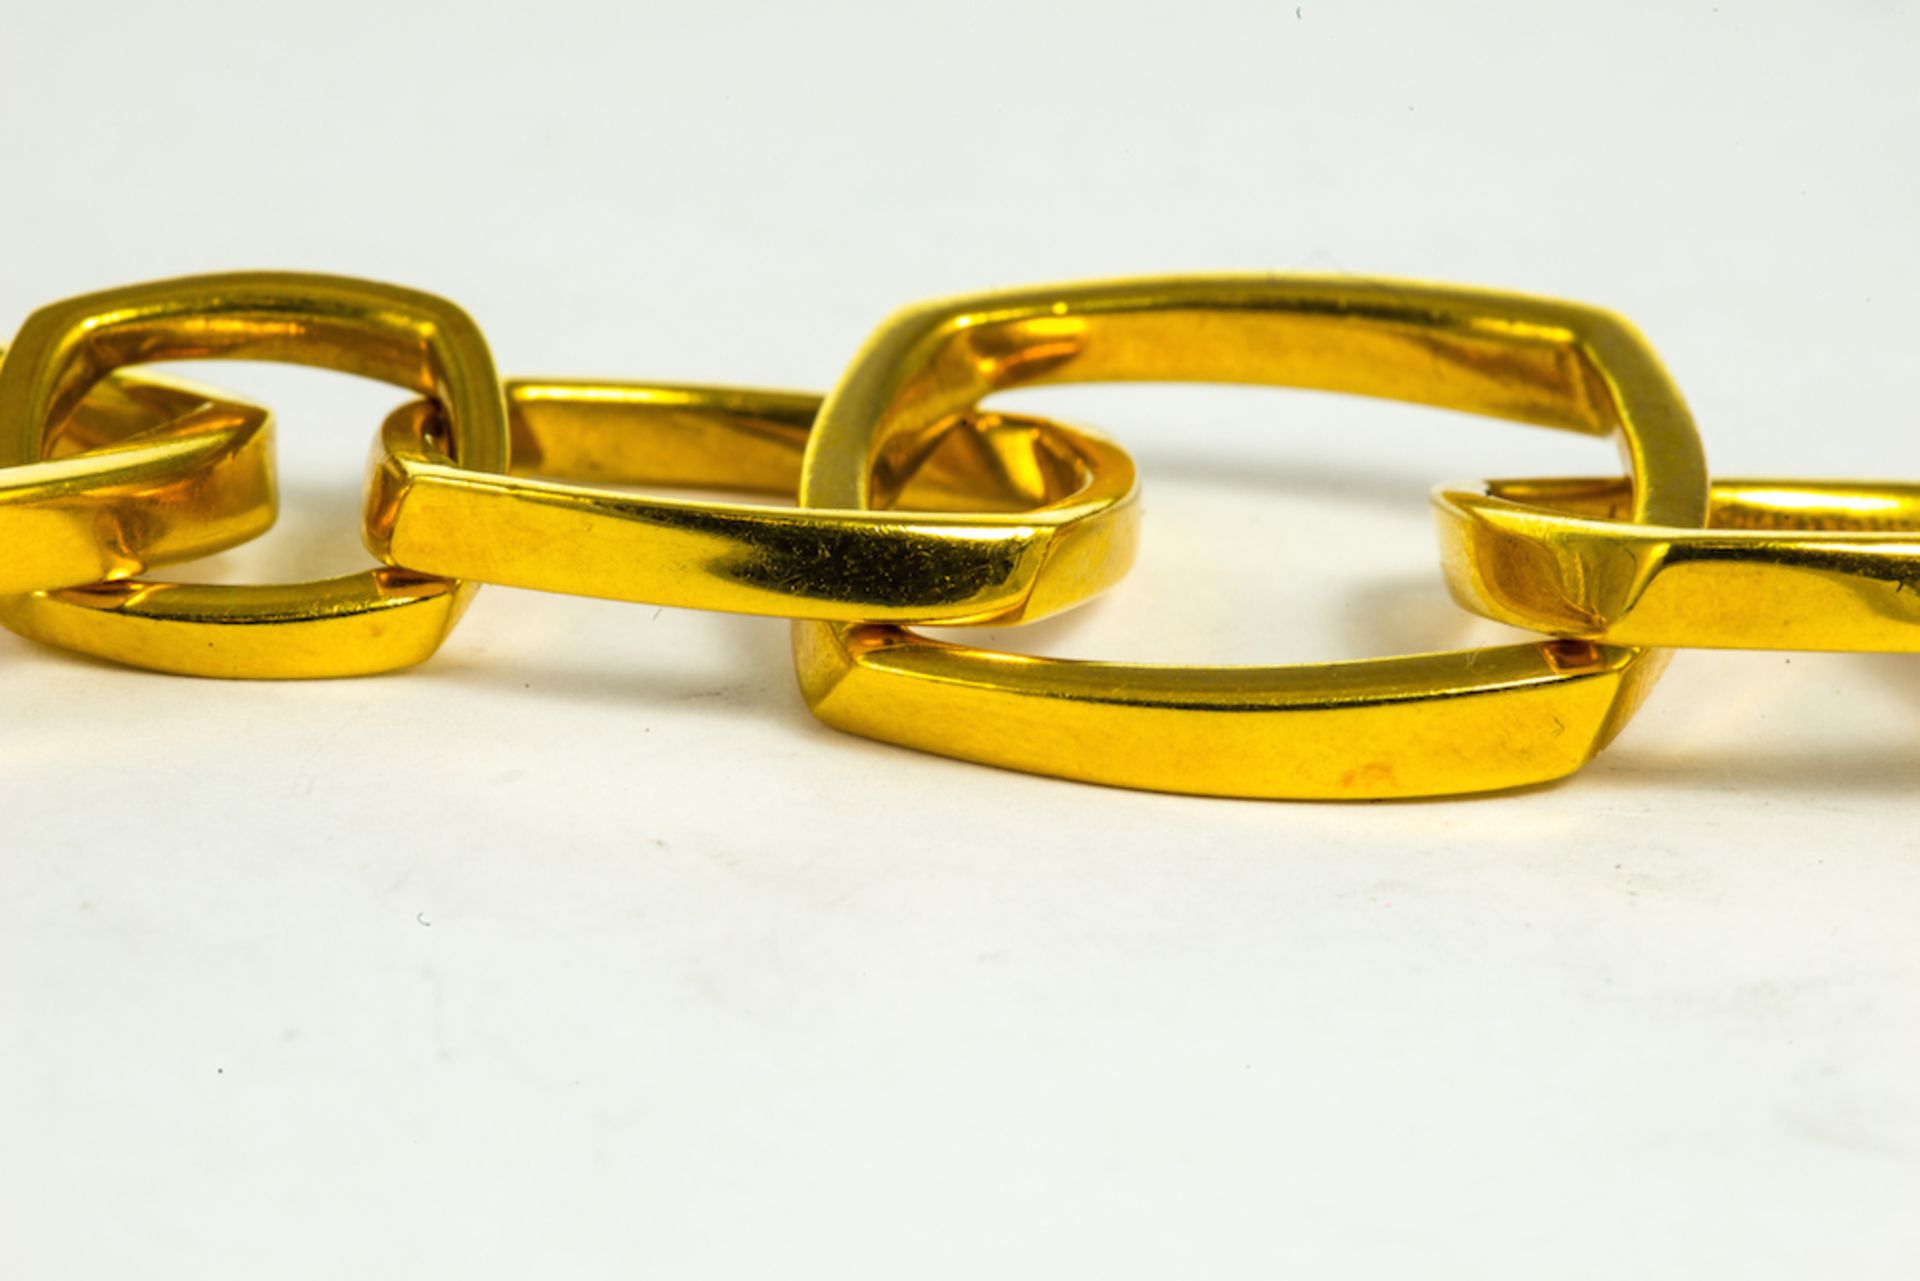 TIFFANY AND CO - fancy link bracelet designed by Frank Gehry for Tiffany and Co 2007, designed as a